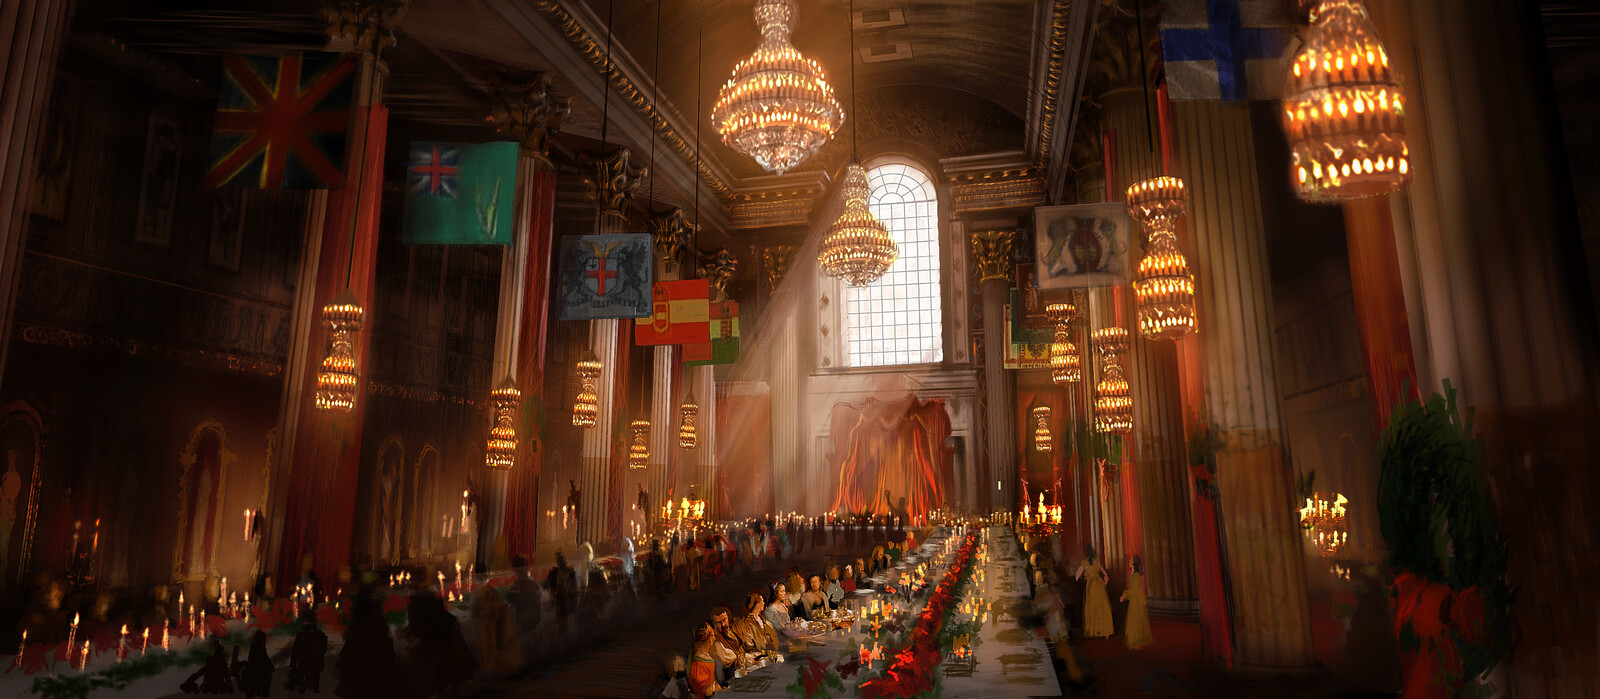 A Christmas Carol "Mayors Banquet Hall" - while at Image Movers Digital